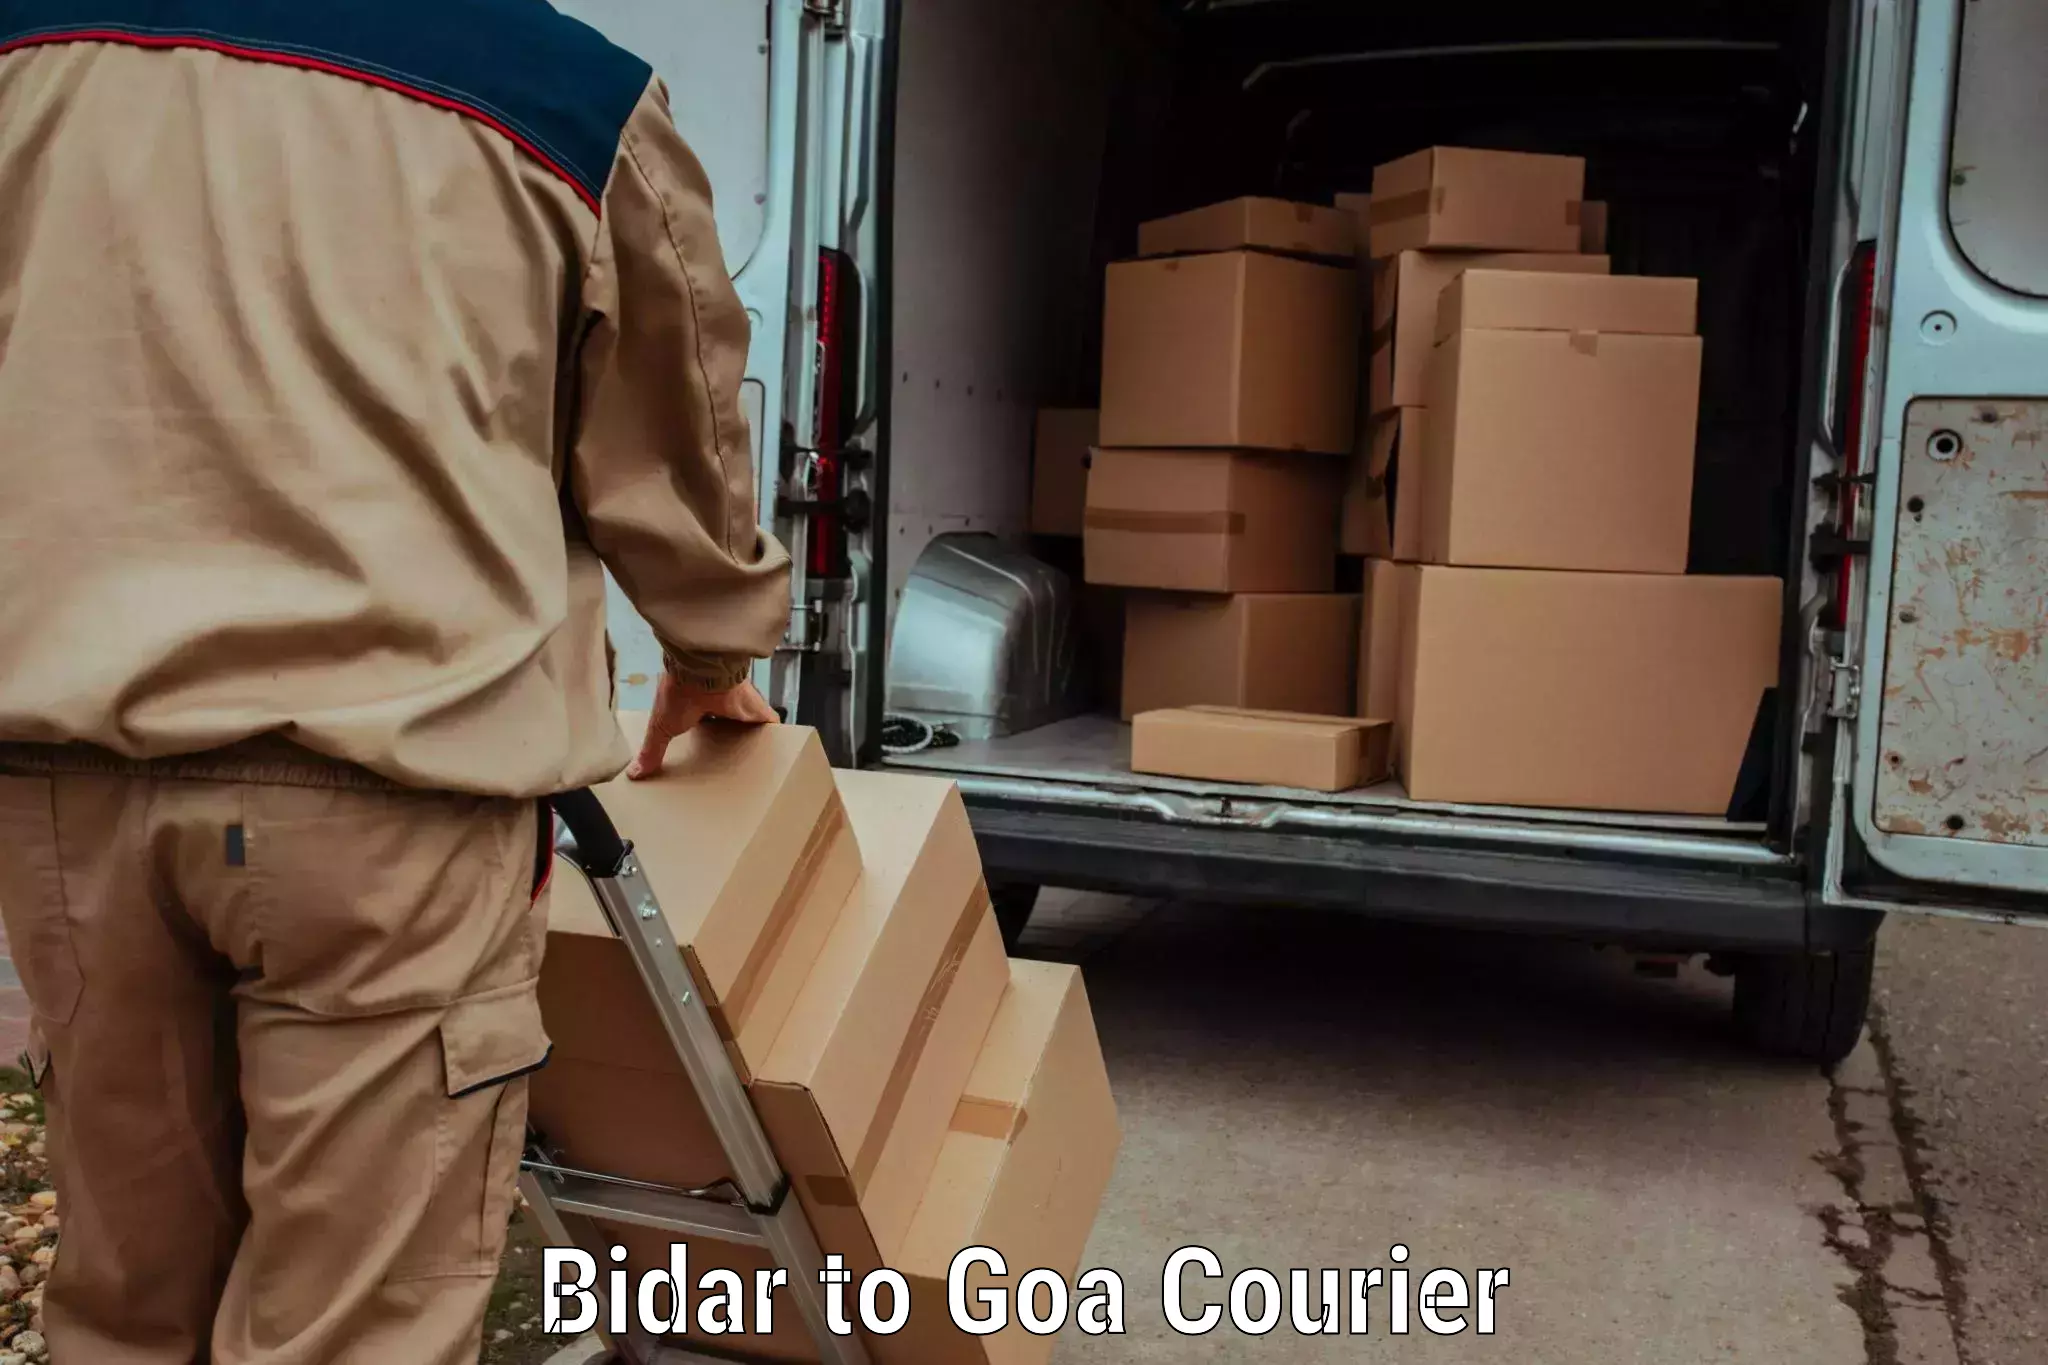 Tracking updates in Bidar to Goa